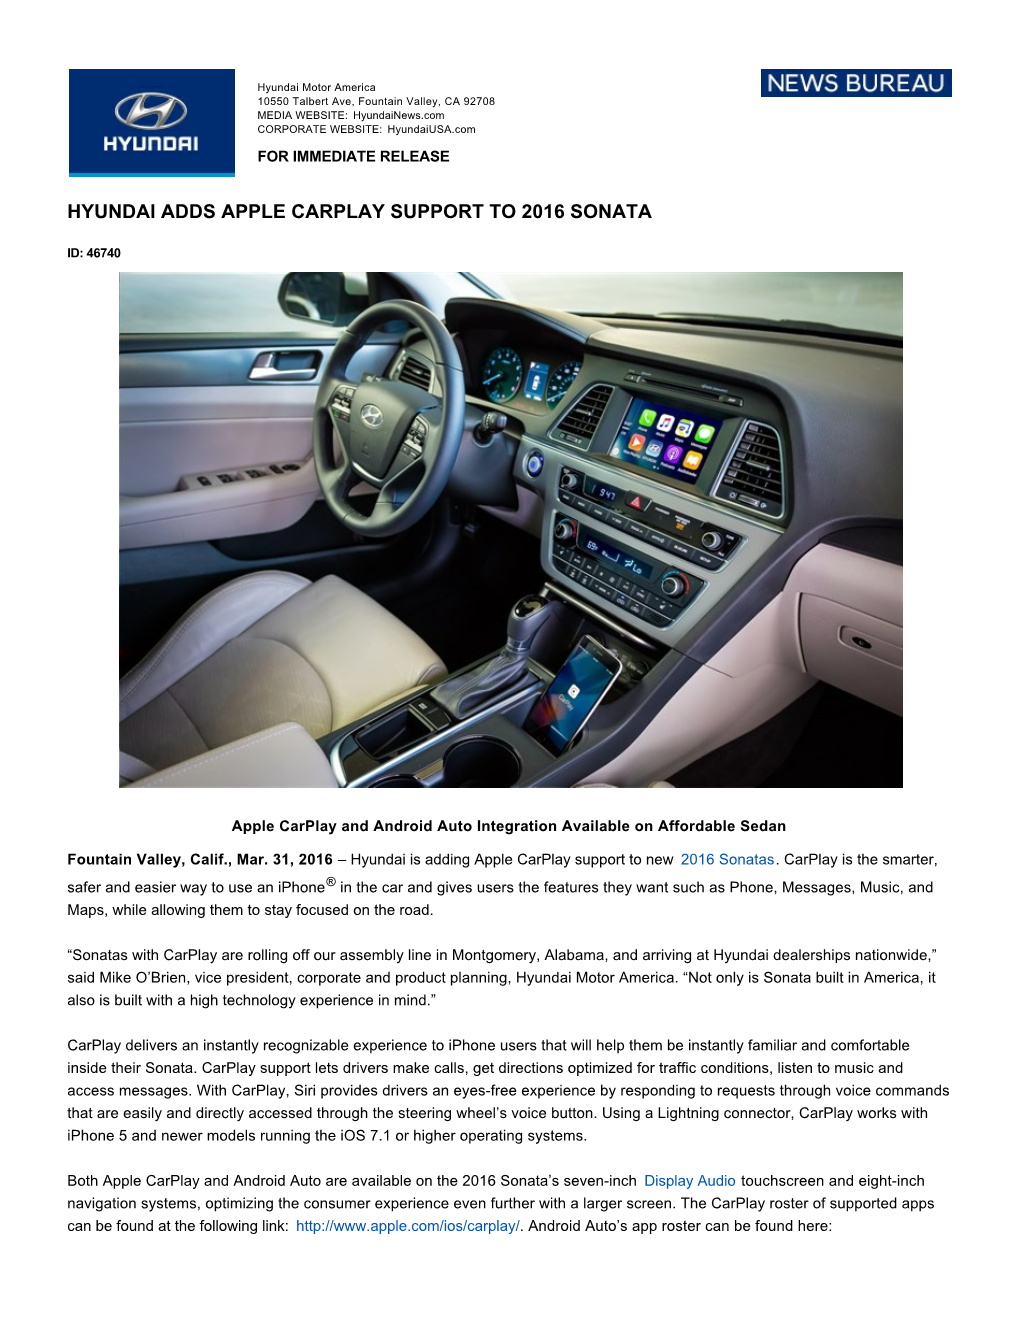 Hyundai Adds Apple Carplay Support to 2016 Sonata